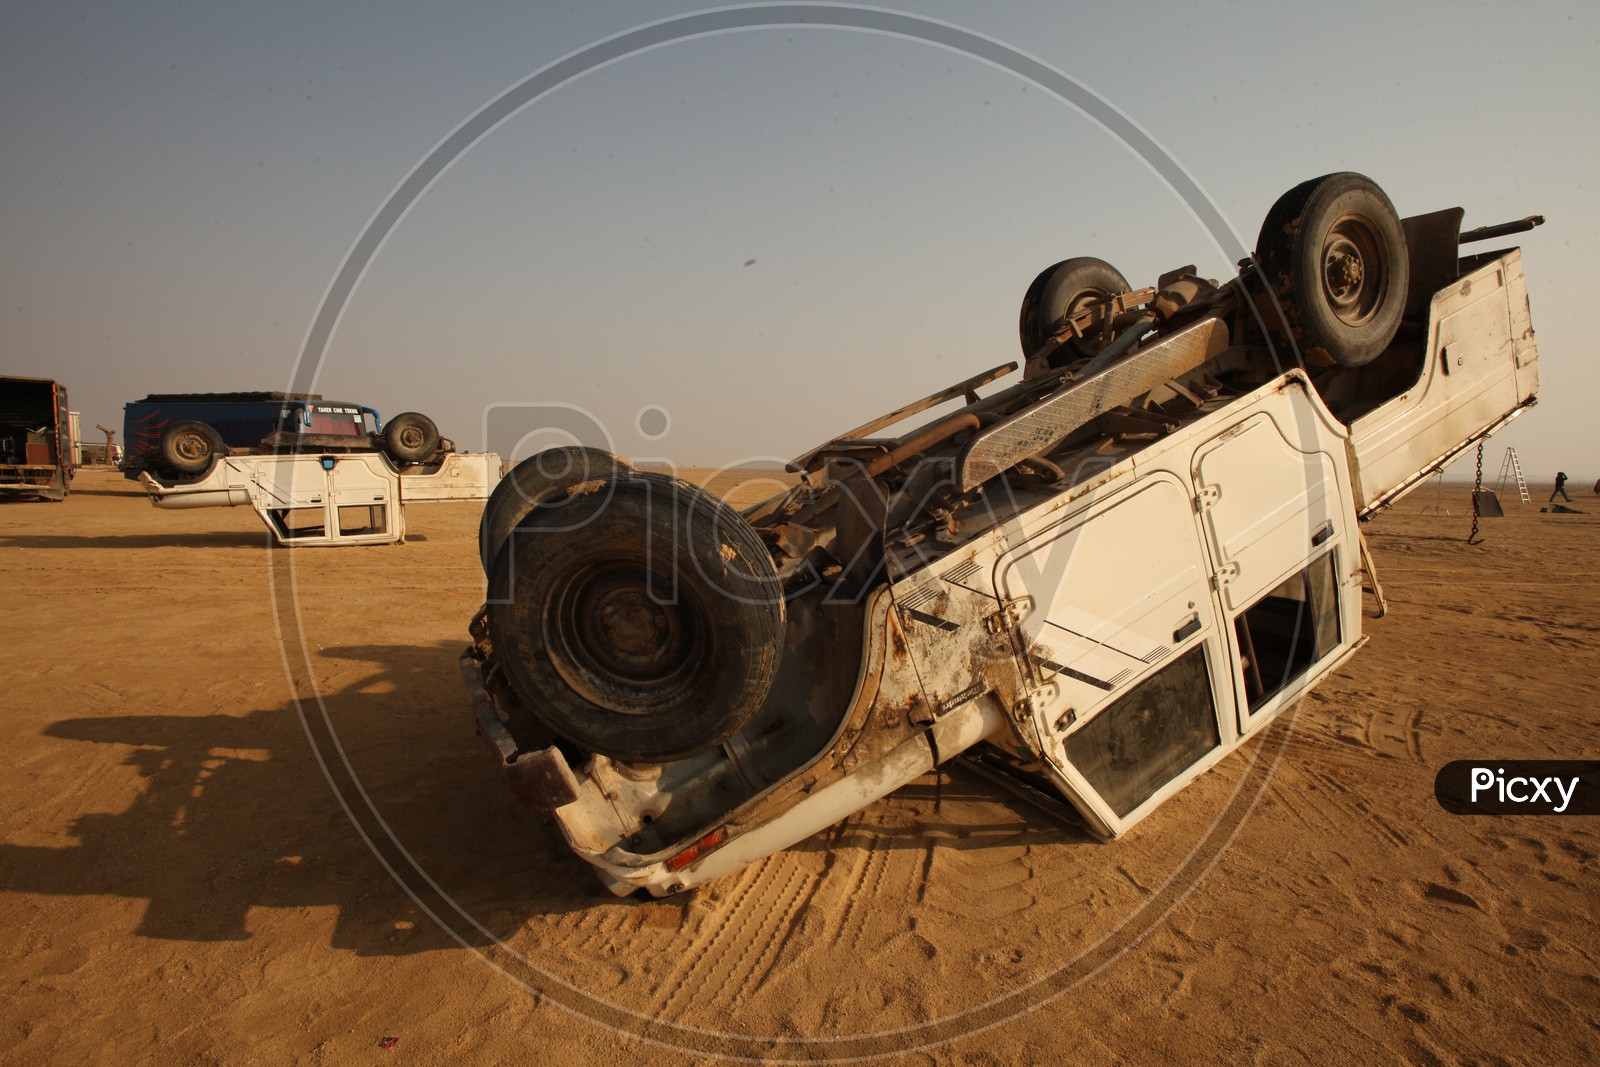 Cars accident in desert